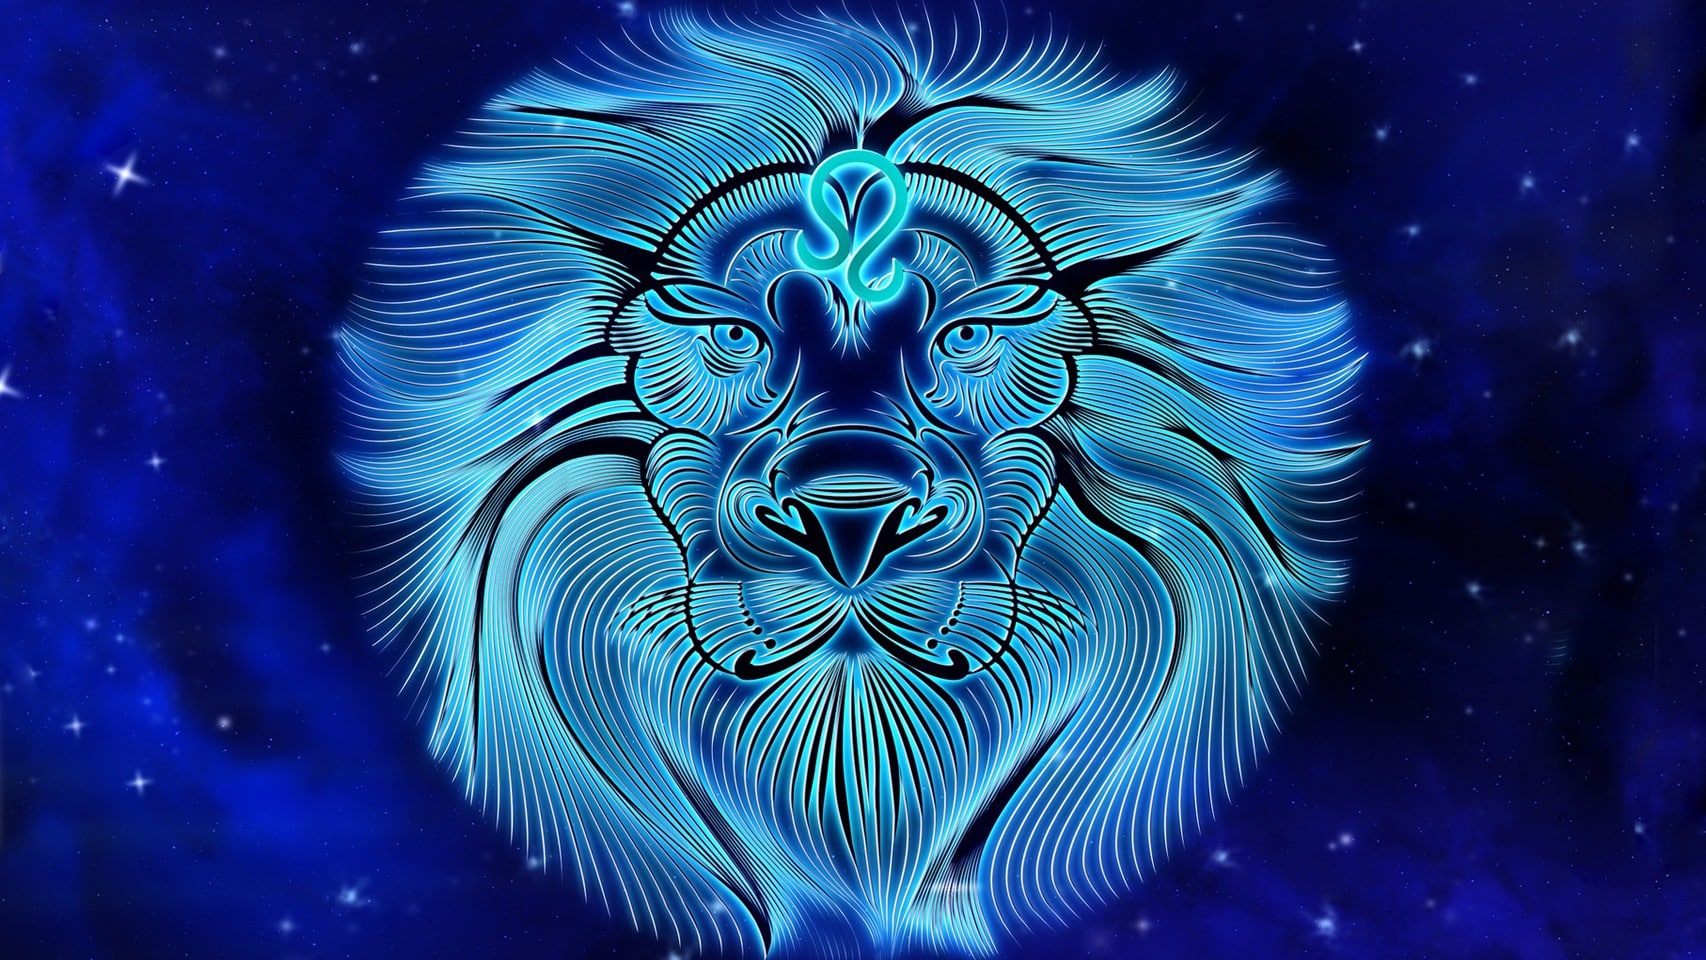 Signo de leão: as principais e mais marcantes características dos leoninos